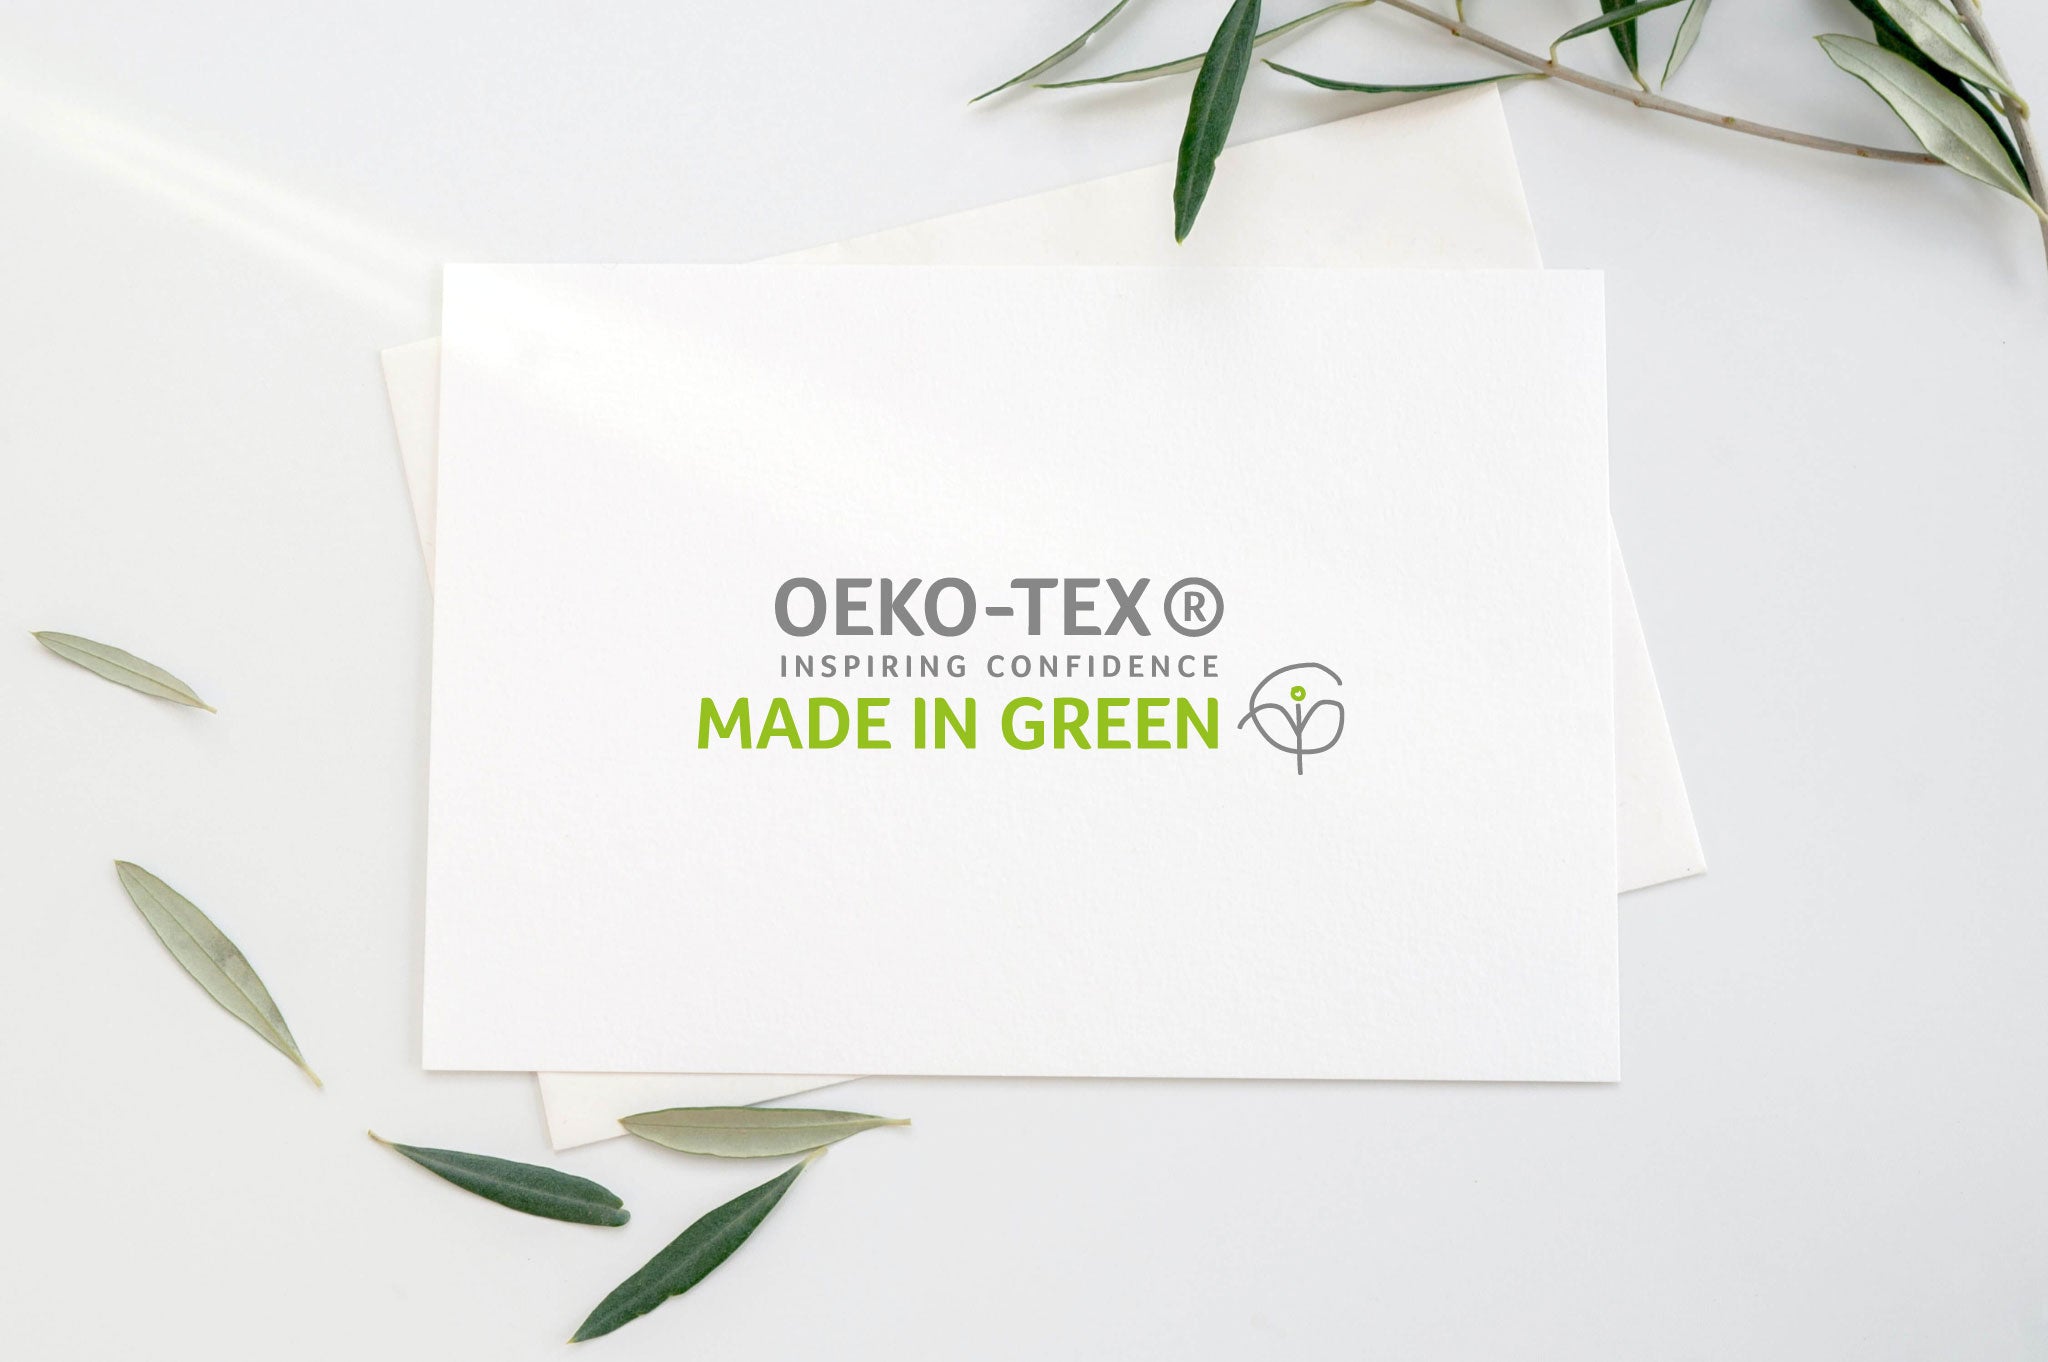 OEKO-TEX® products